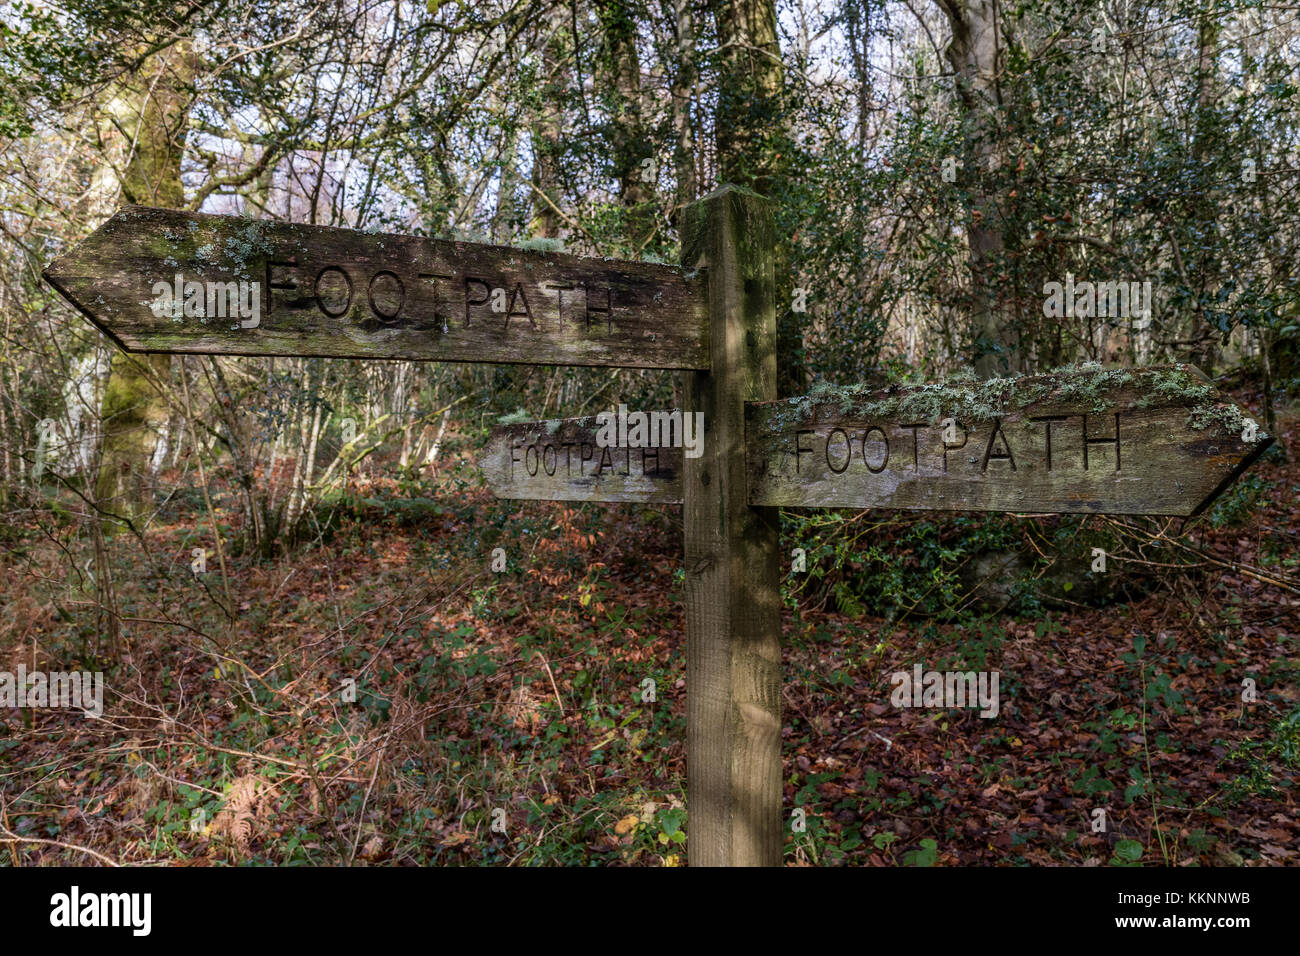 Footpath directions near Manaton, dartmoor National Park, Devon UK Stock Photo